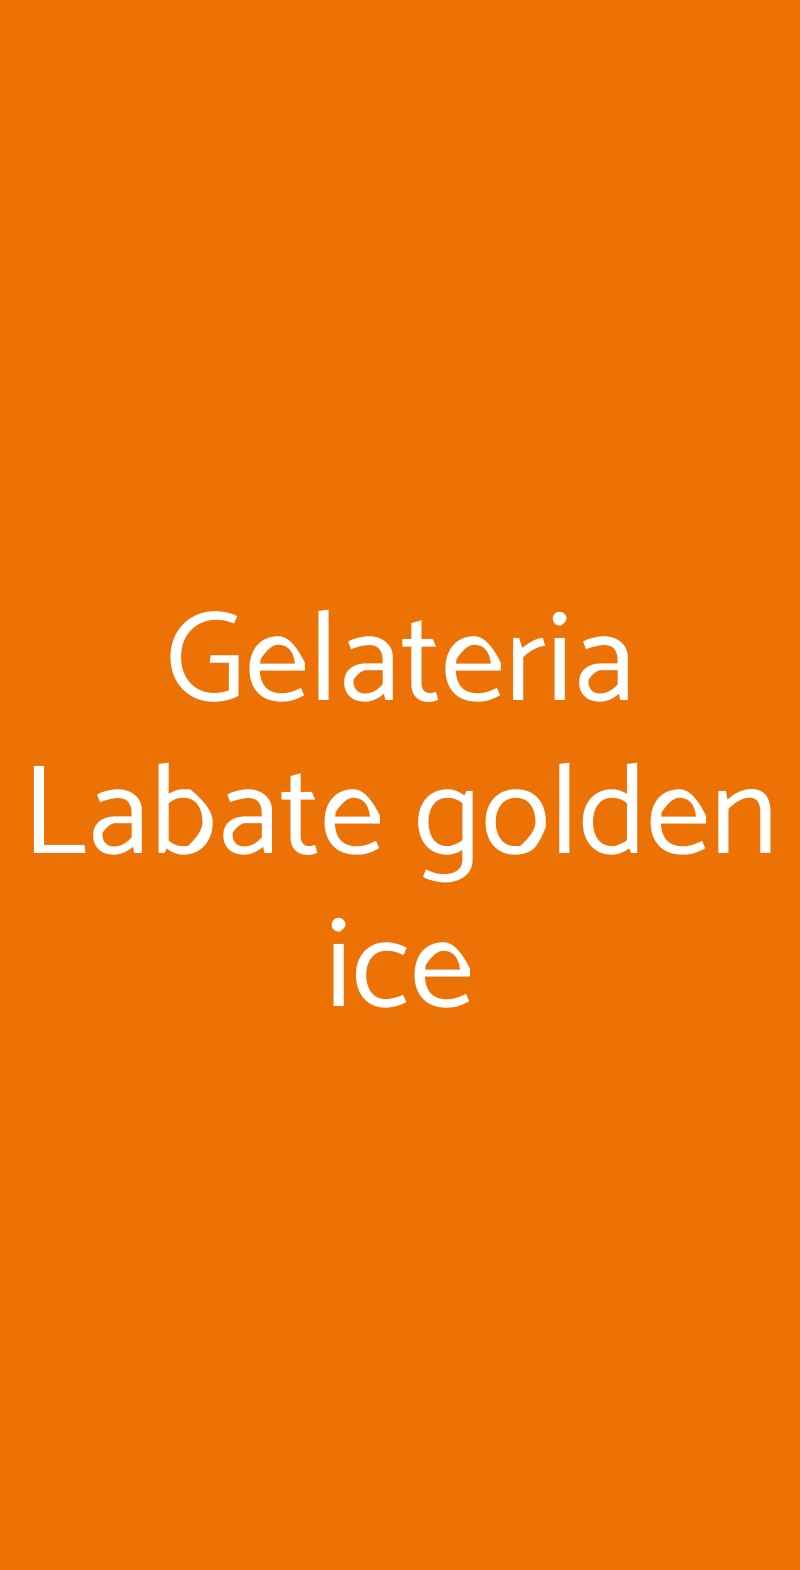 Gelateria Labate golden ice Roma menù 1 pagina